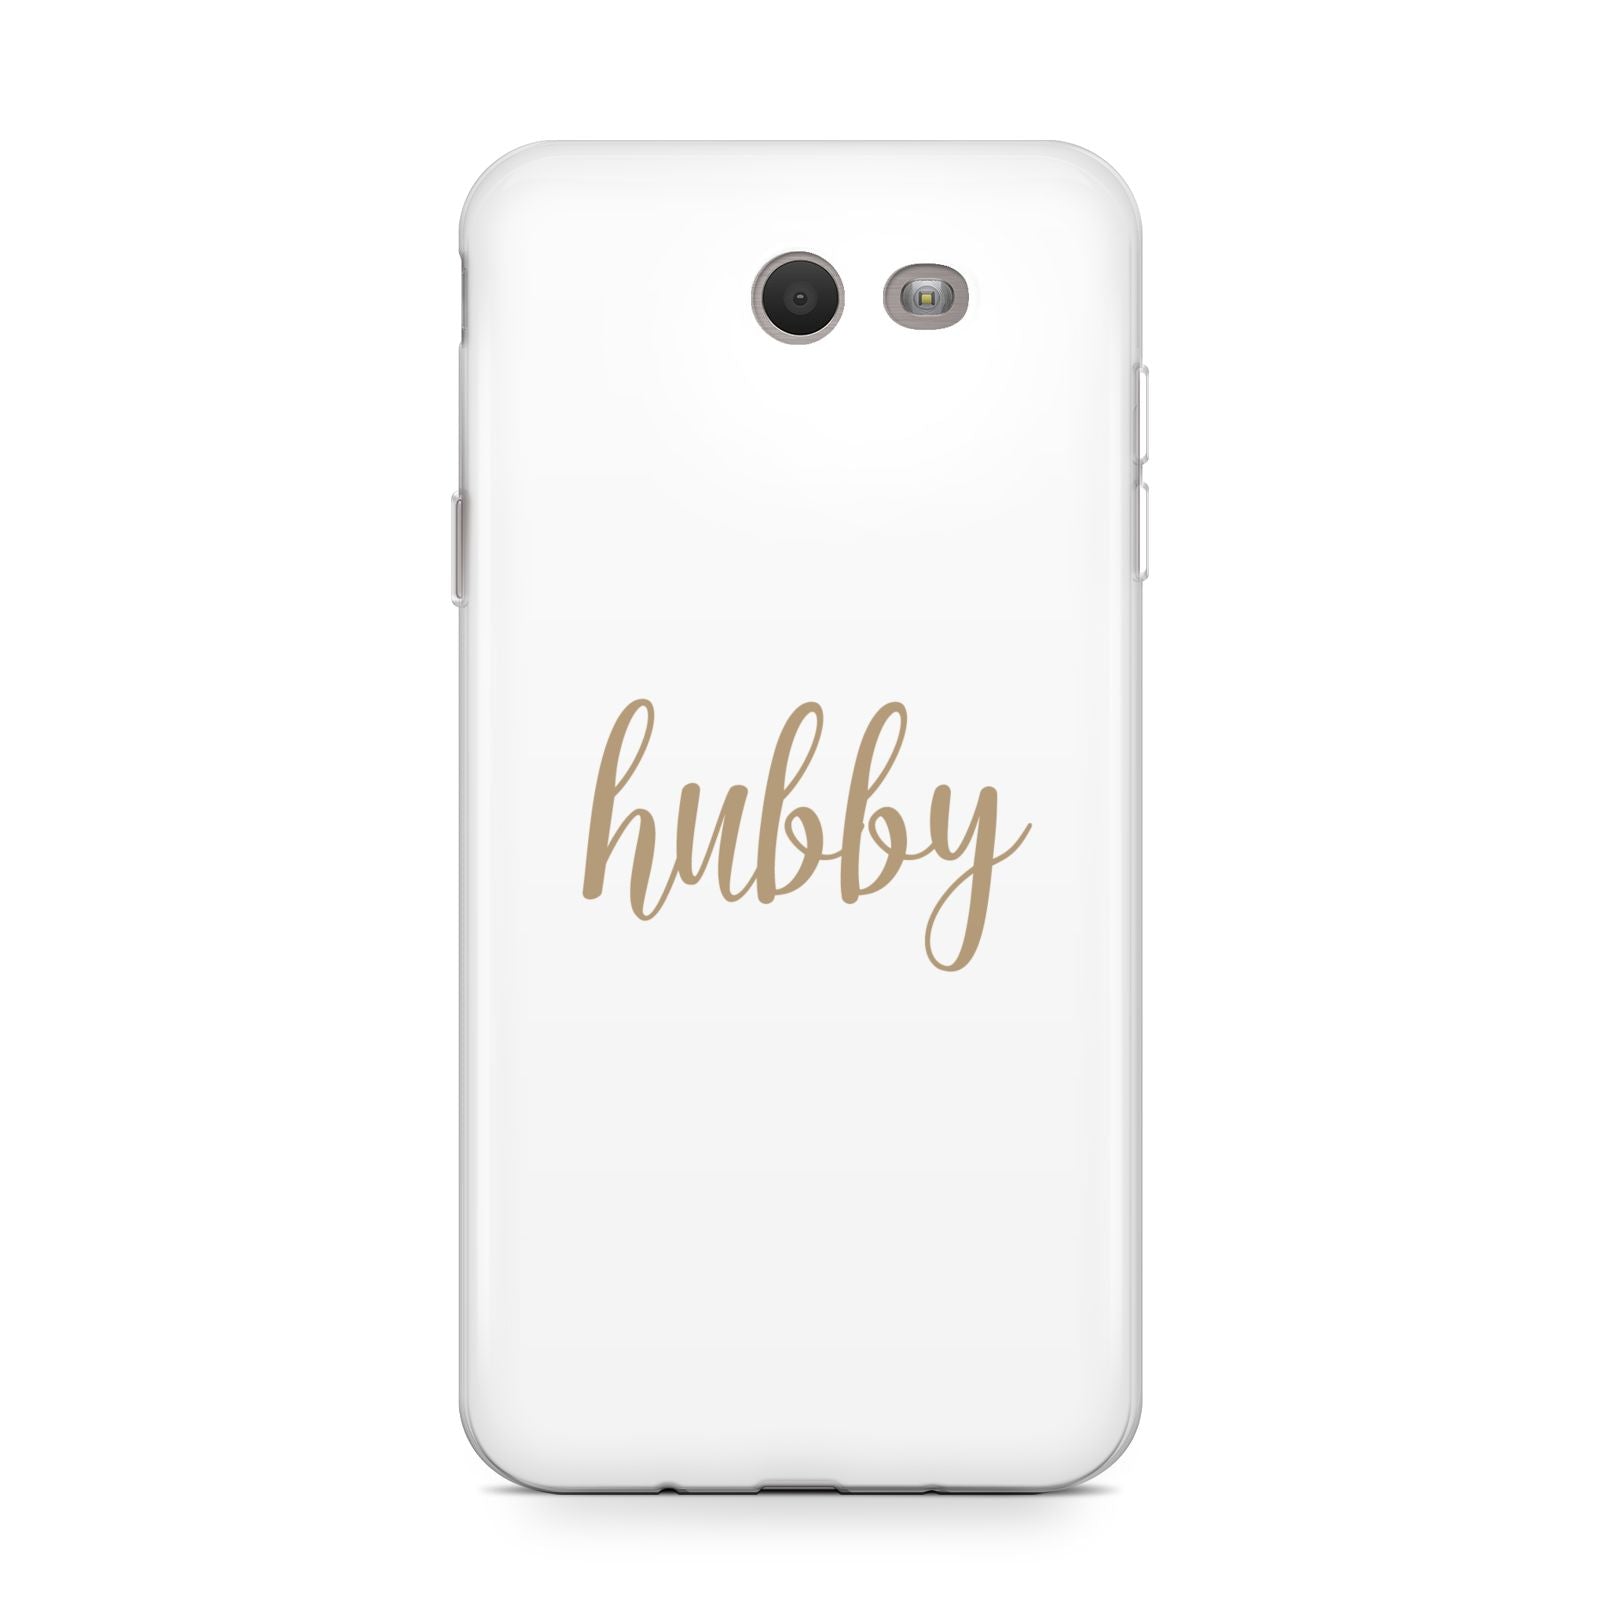 Hubby Samsung Galaxy J7 2017 Case